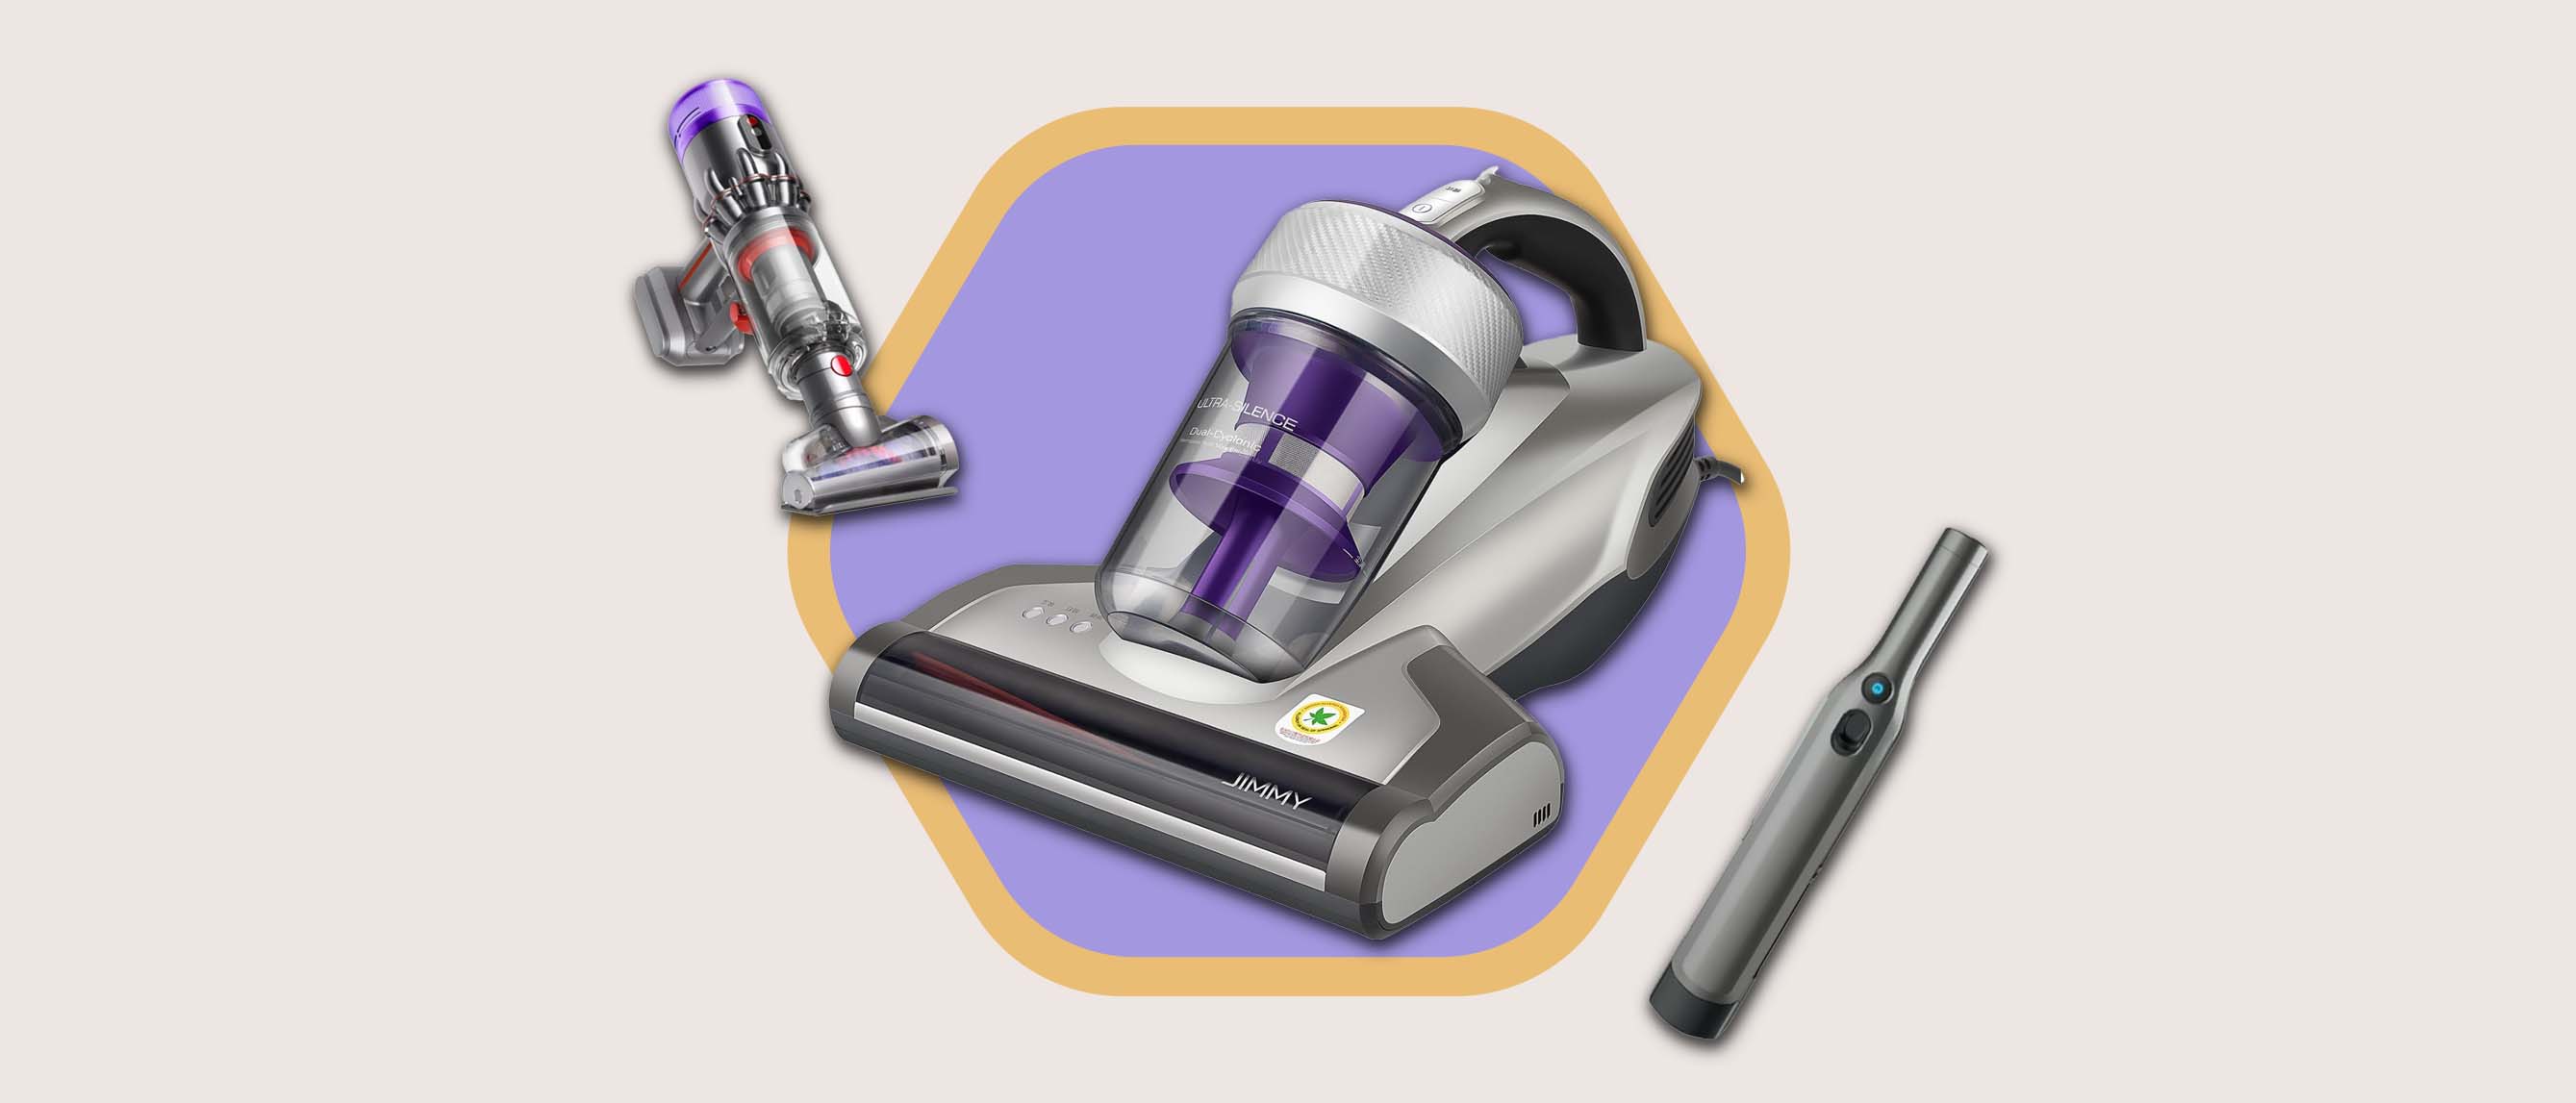 Image of three types of handheld vacuums